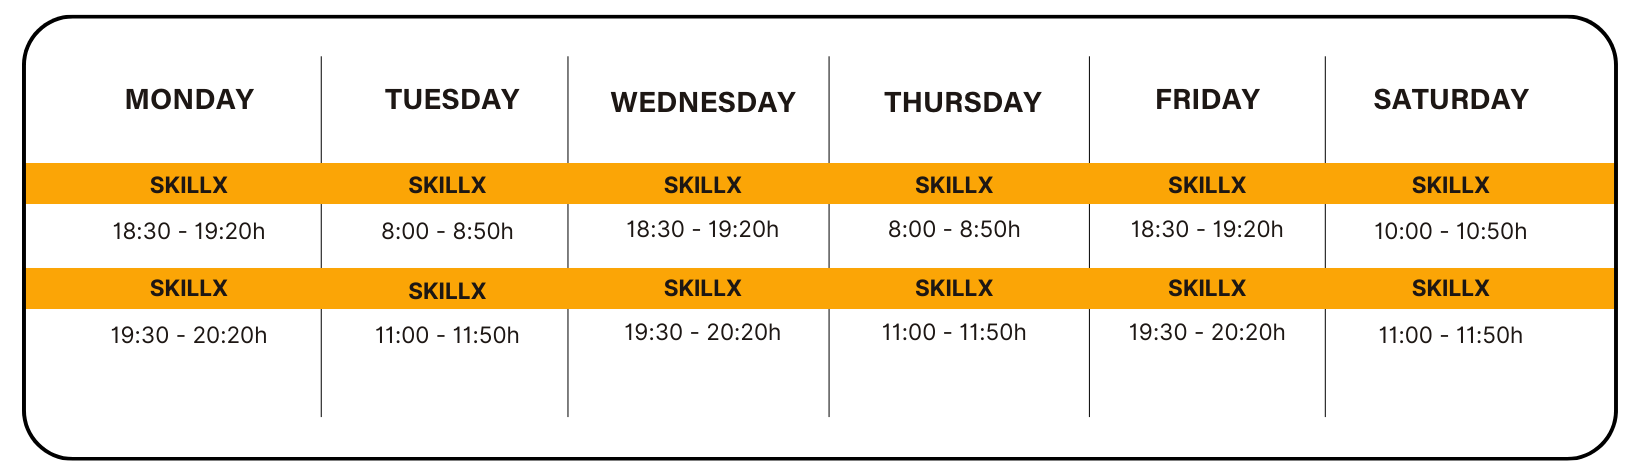 SkillX group class schedule